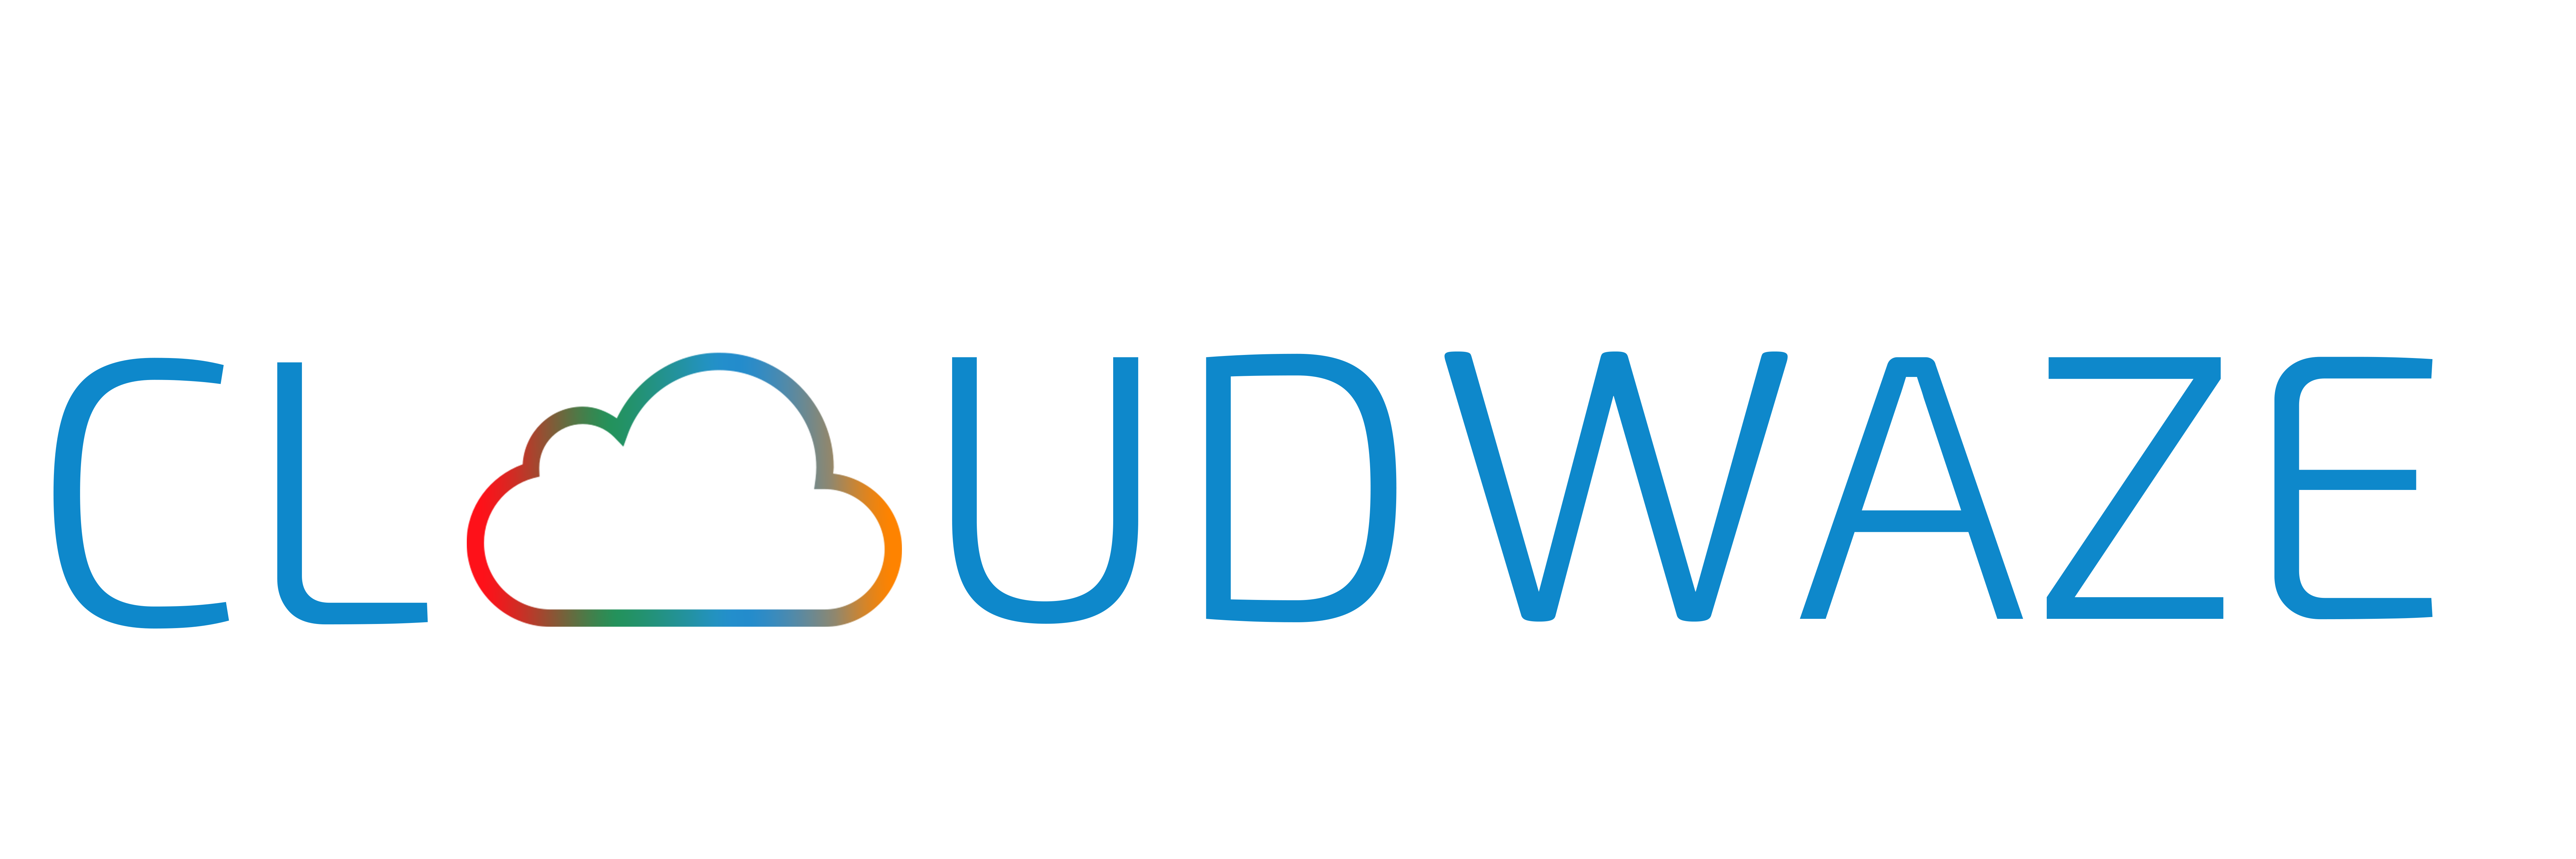 Cloudwaze Logo - 1